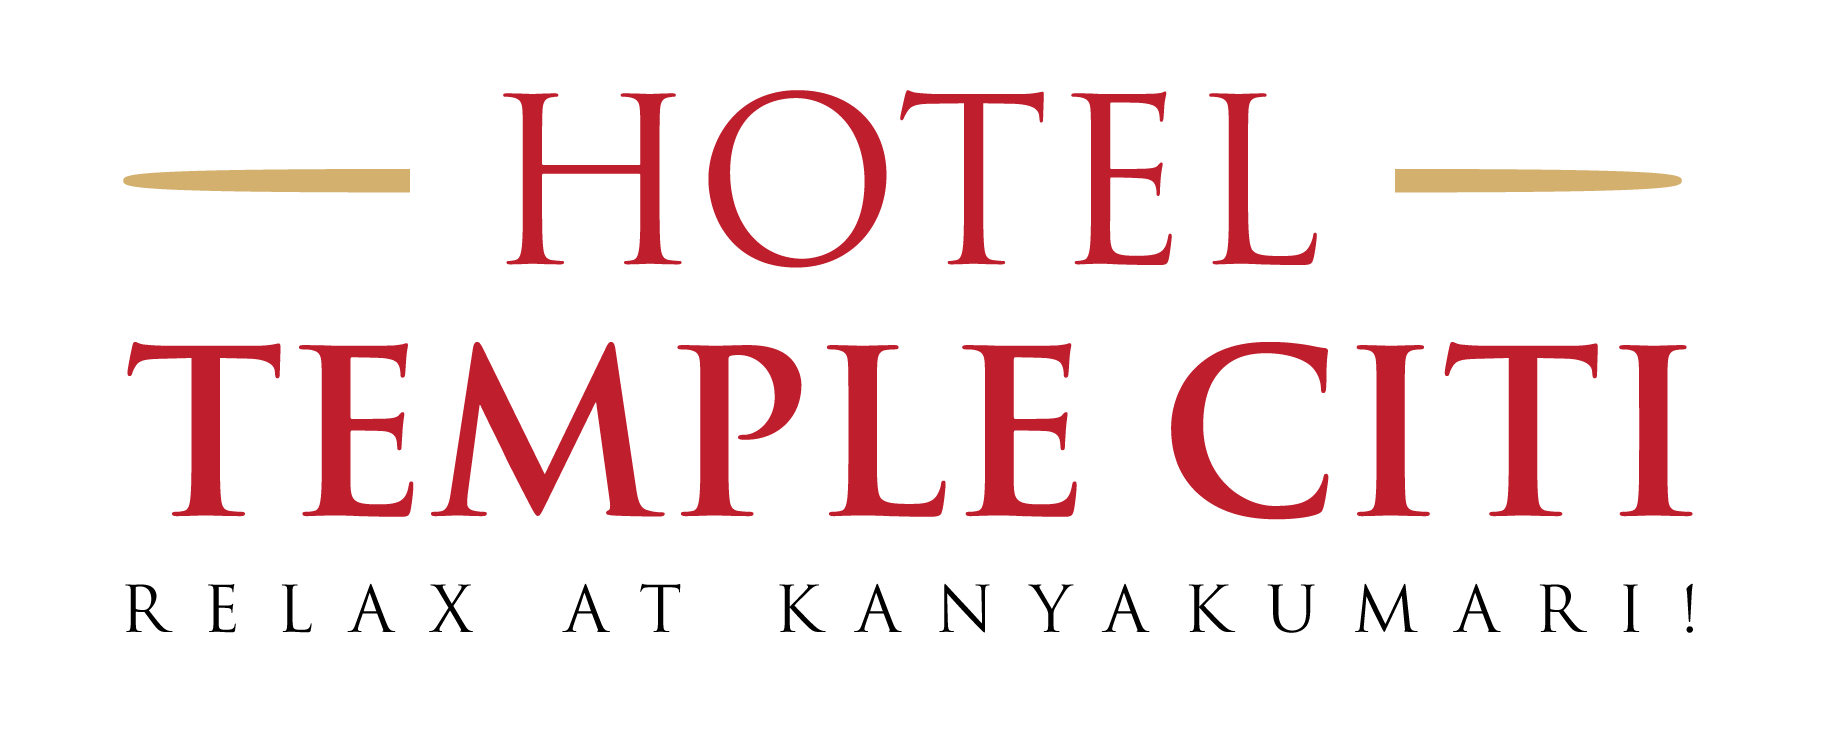 Hotel Booking In Kanyakumari - Other Hotels, Motels, Resorts, Restaurants